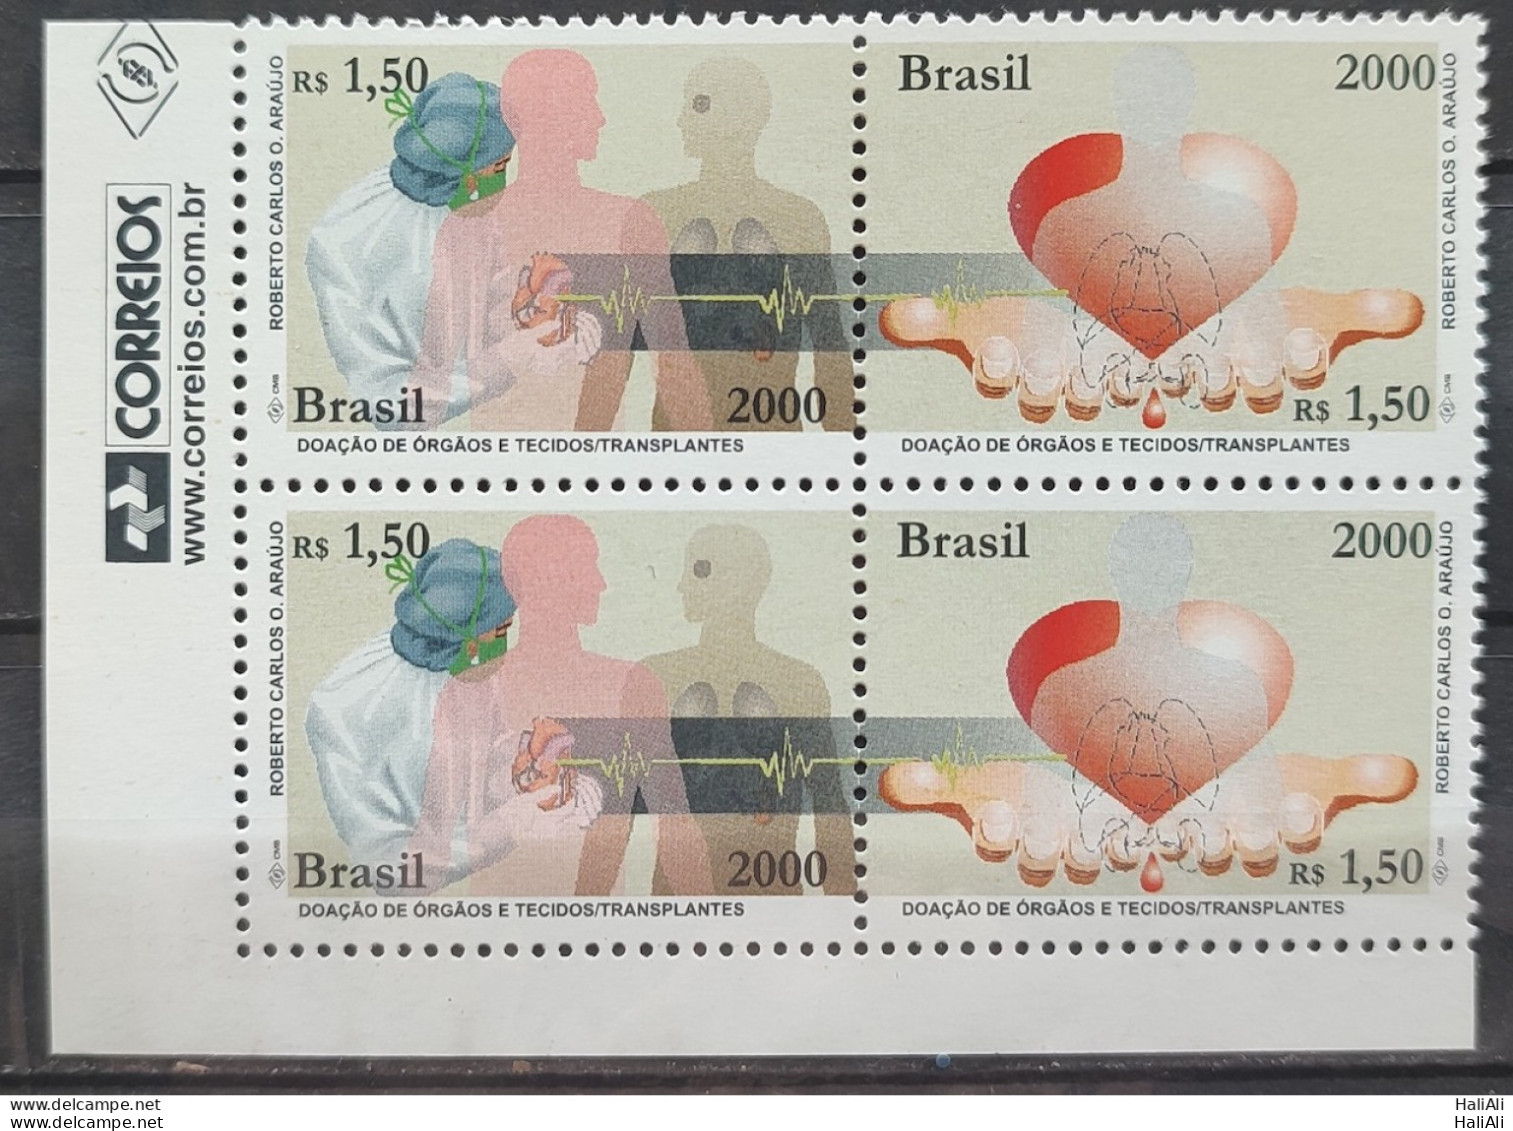 C 2341 Brazil Stamp Donation Of Organ And Tissues Science Health 2000 Block Of 4 Vignette Post Office - Ongebruikt